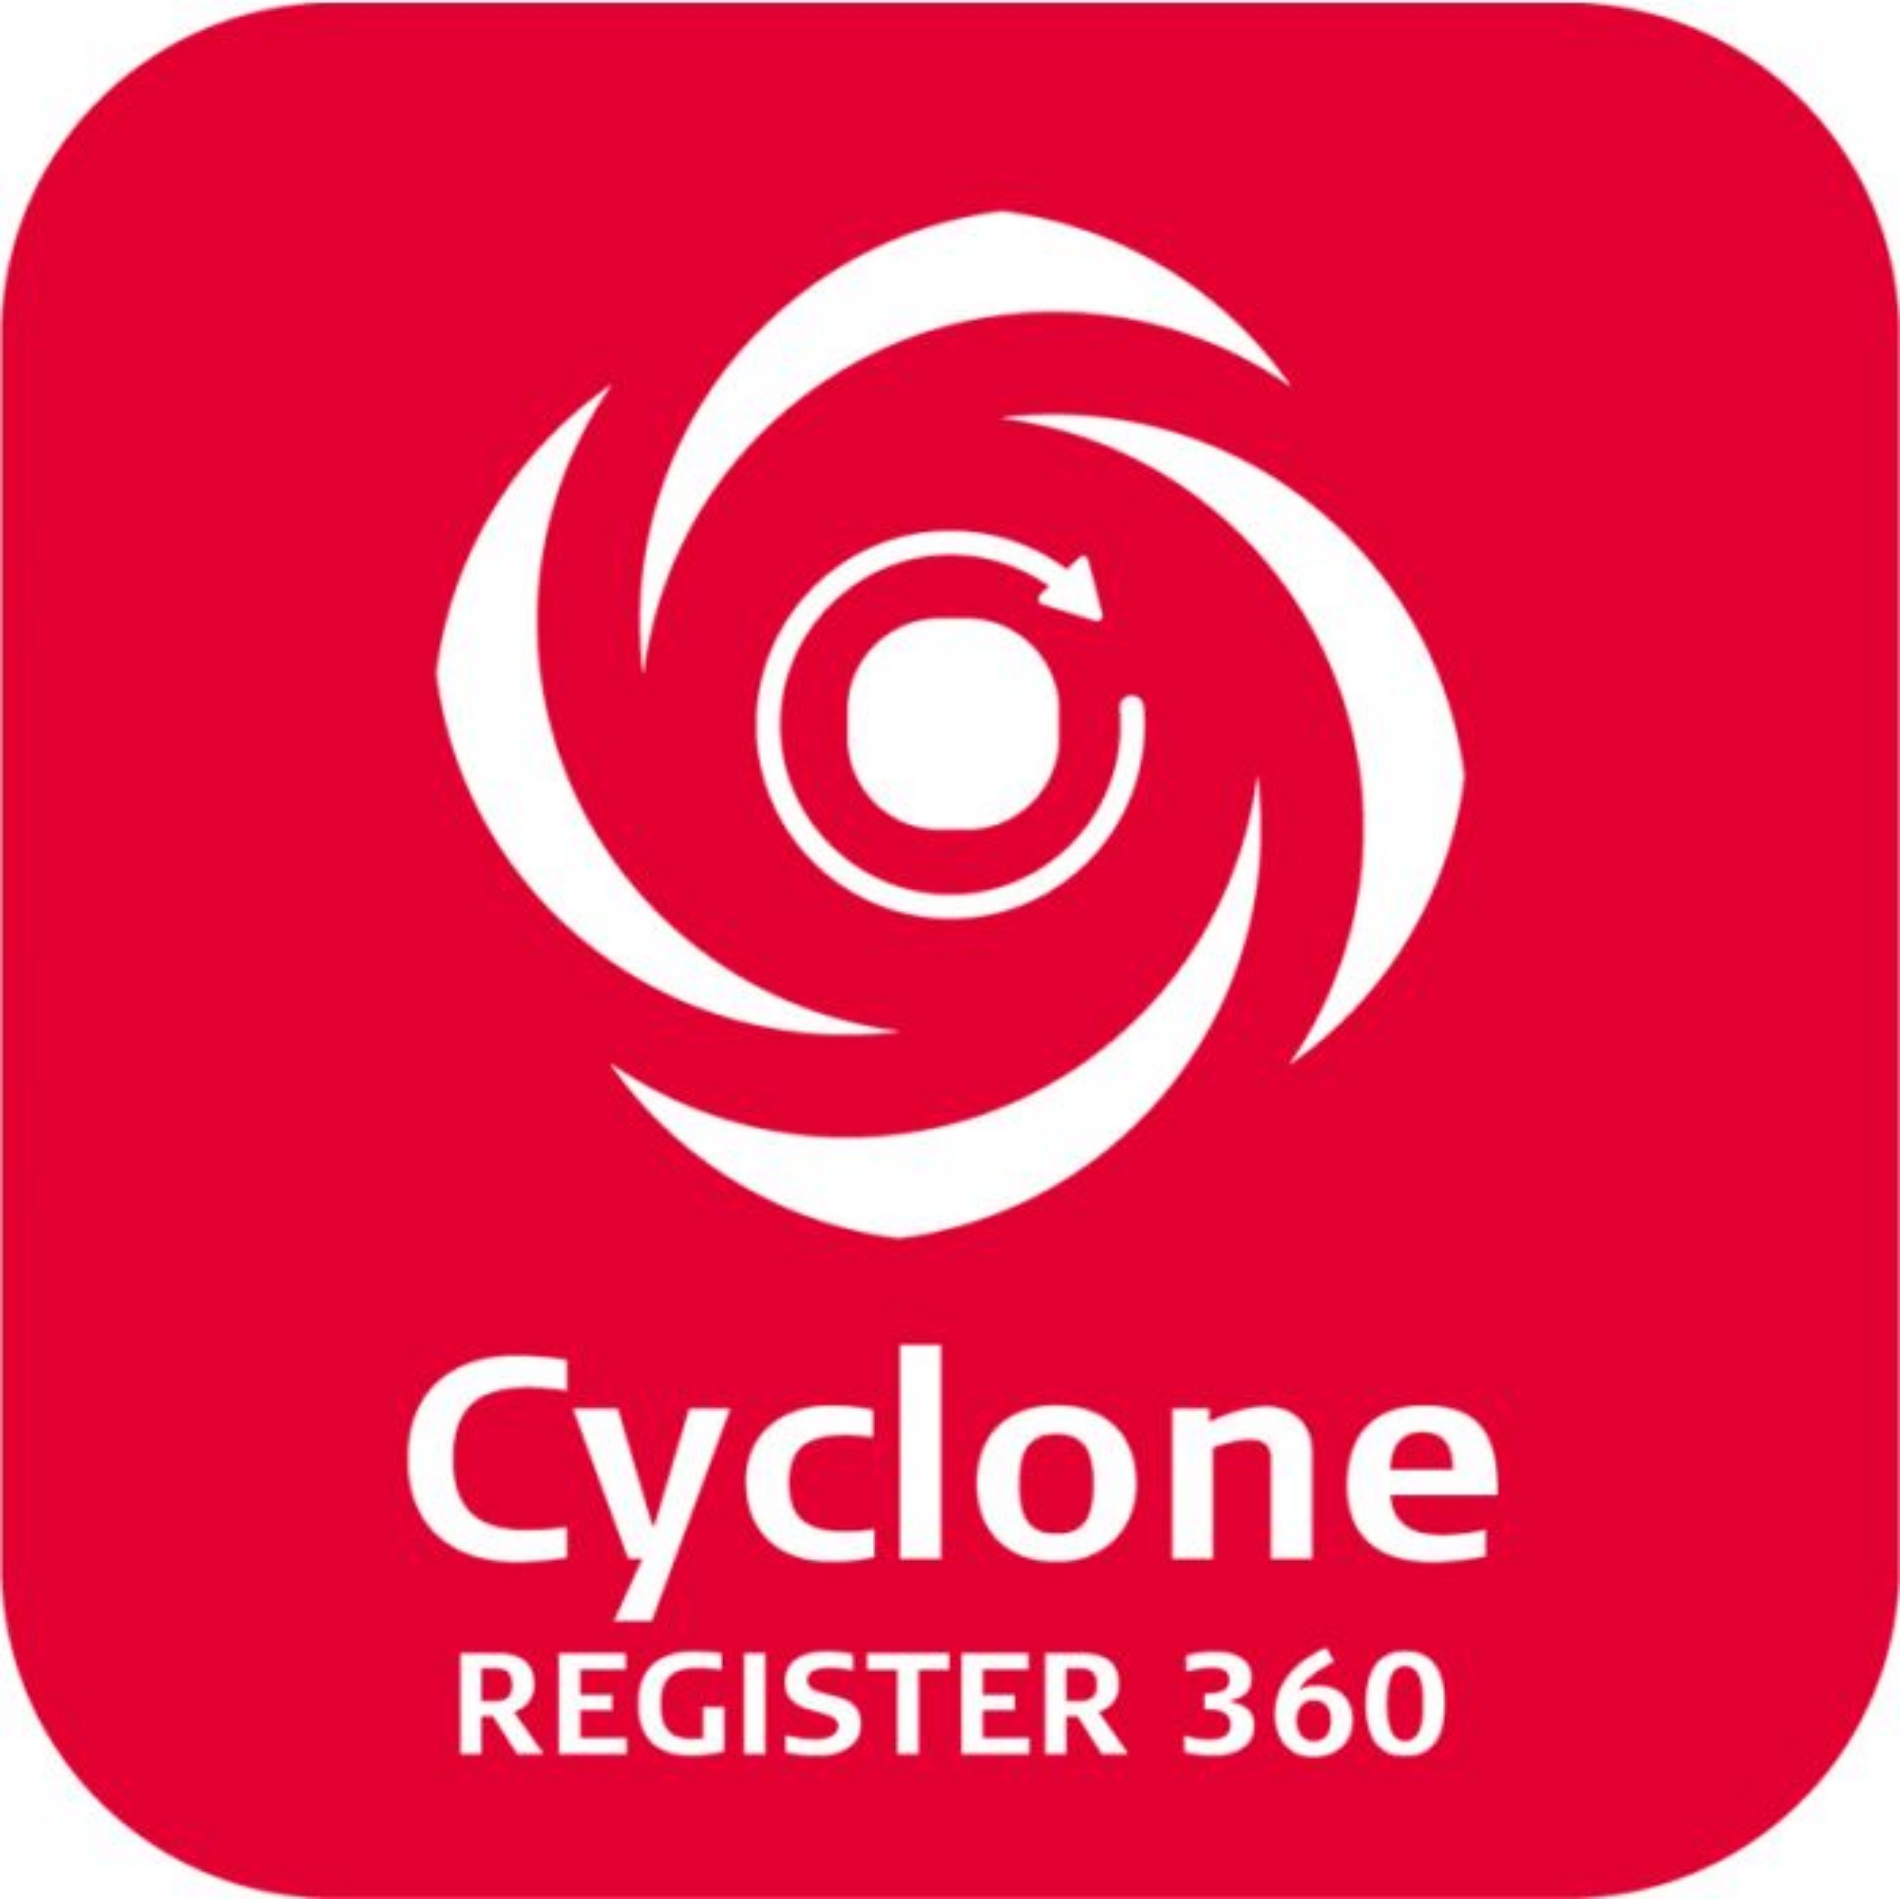 Cyclone REGISTER 360